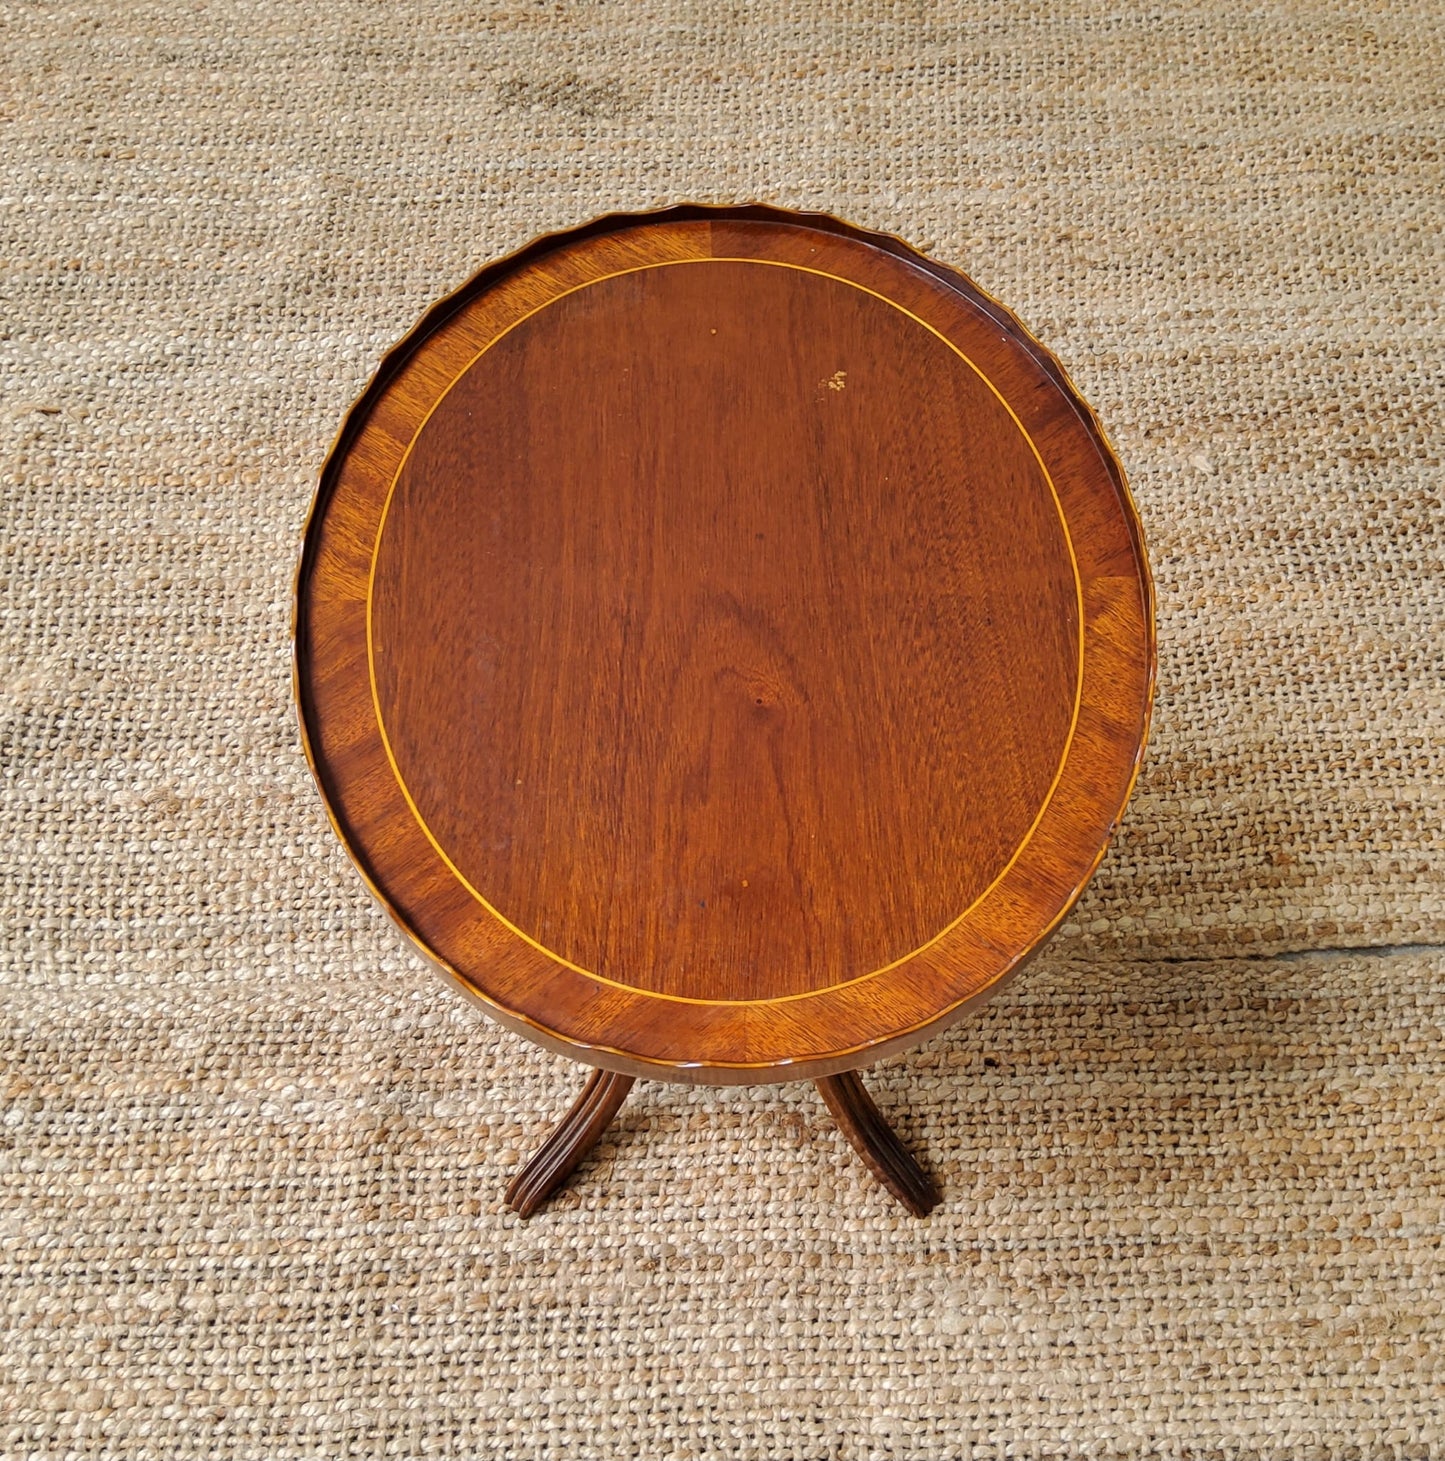 Antique mahogany regency style oval wine table